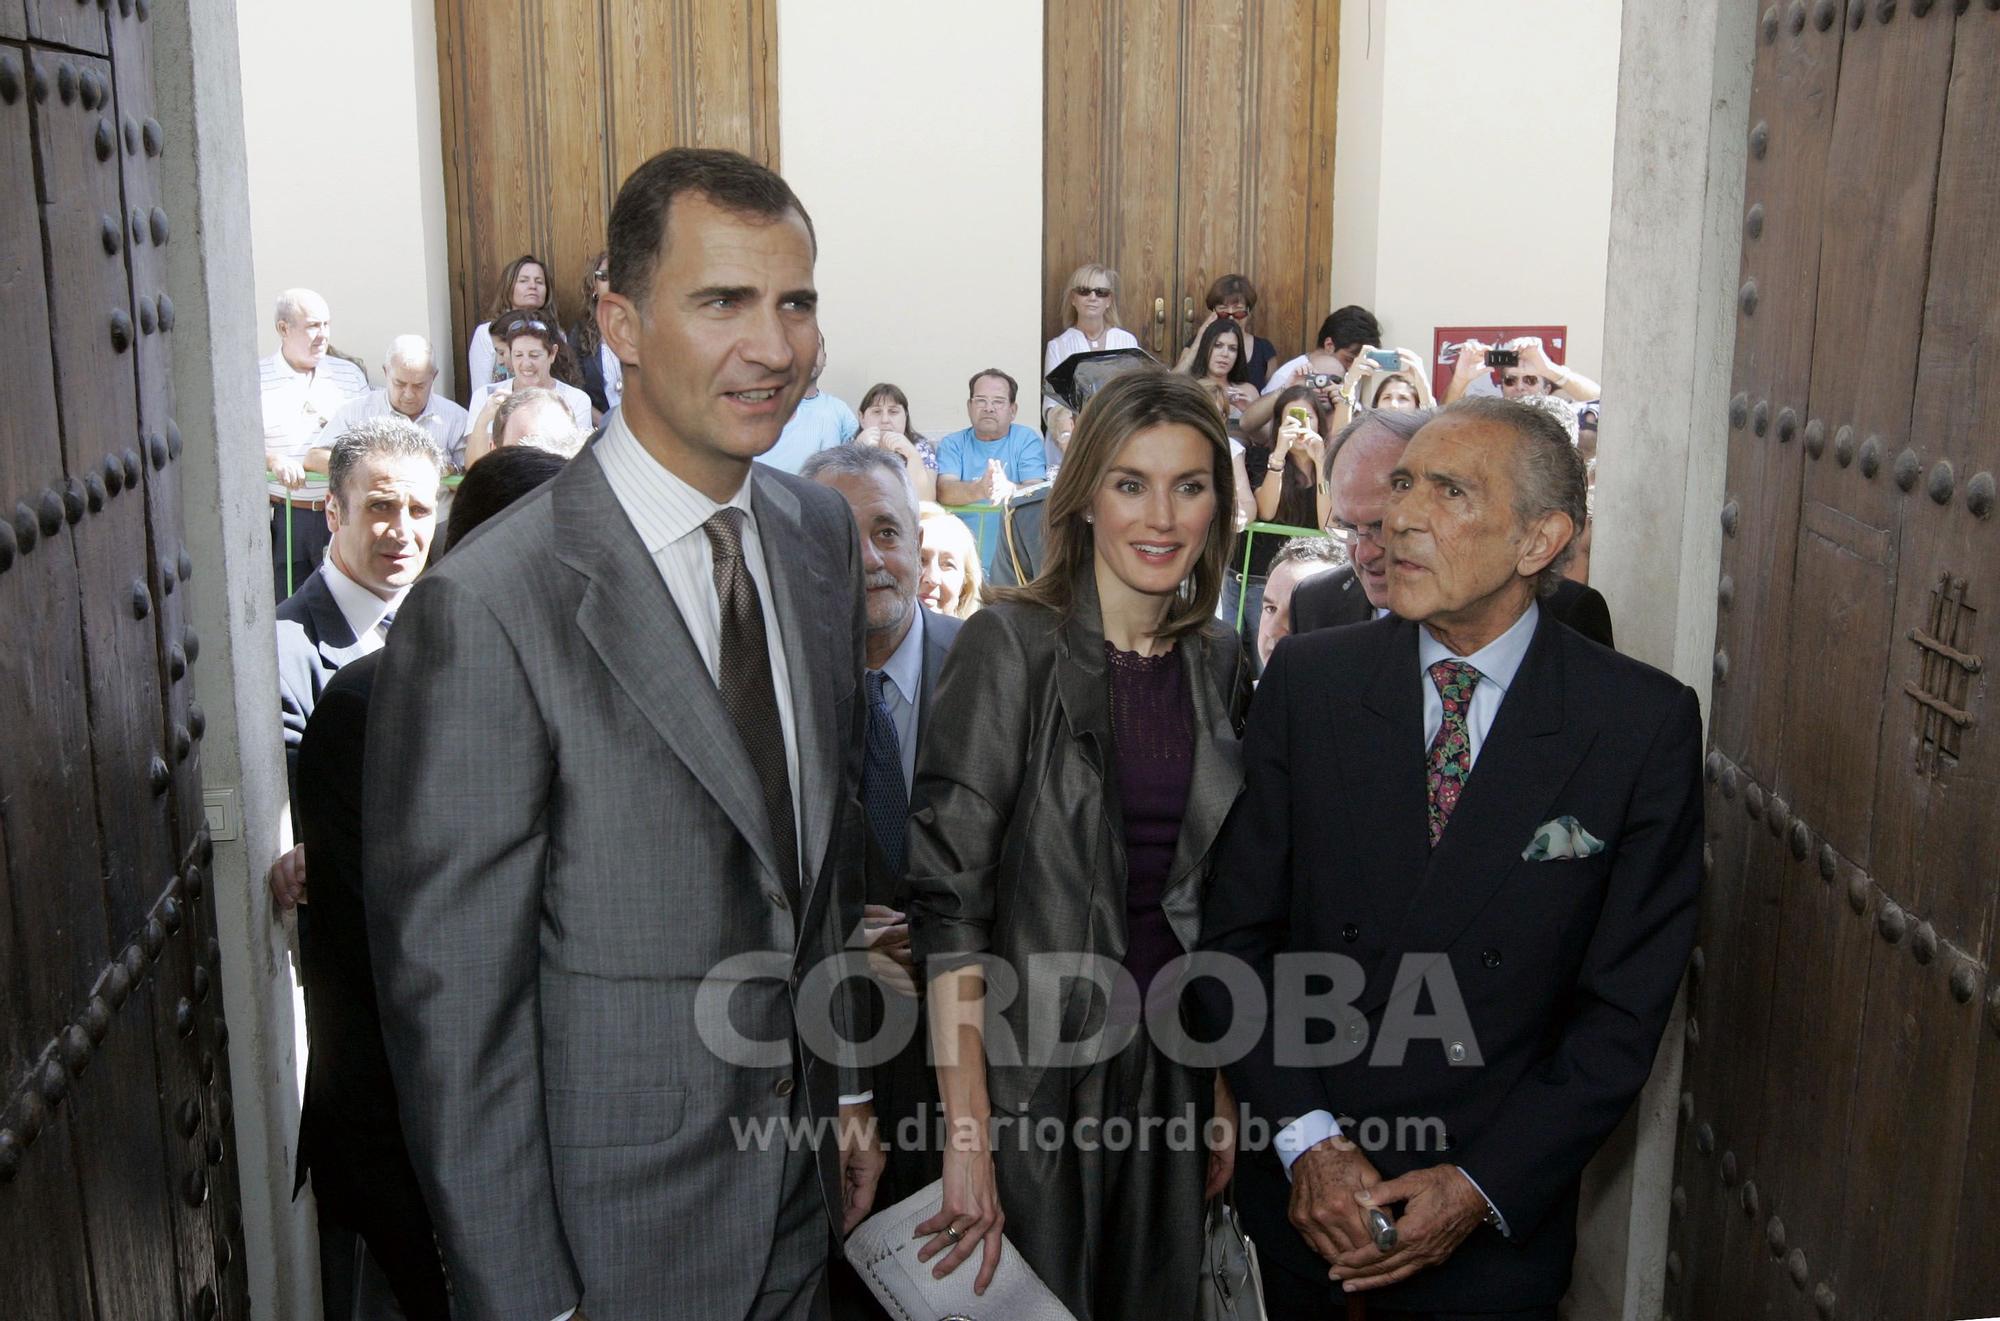 2011 los principes de asturias visitan la fundacion AJ (1).jpg